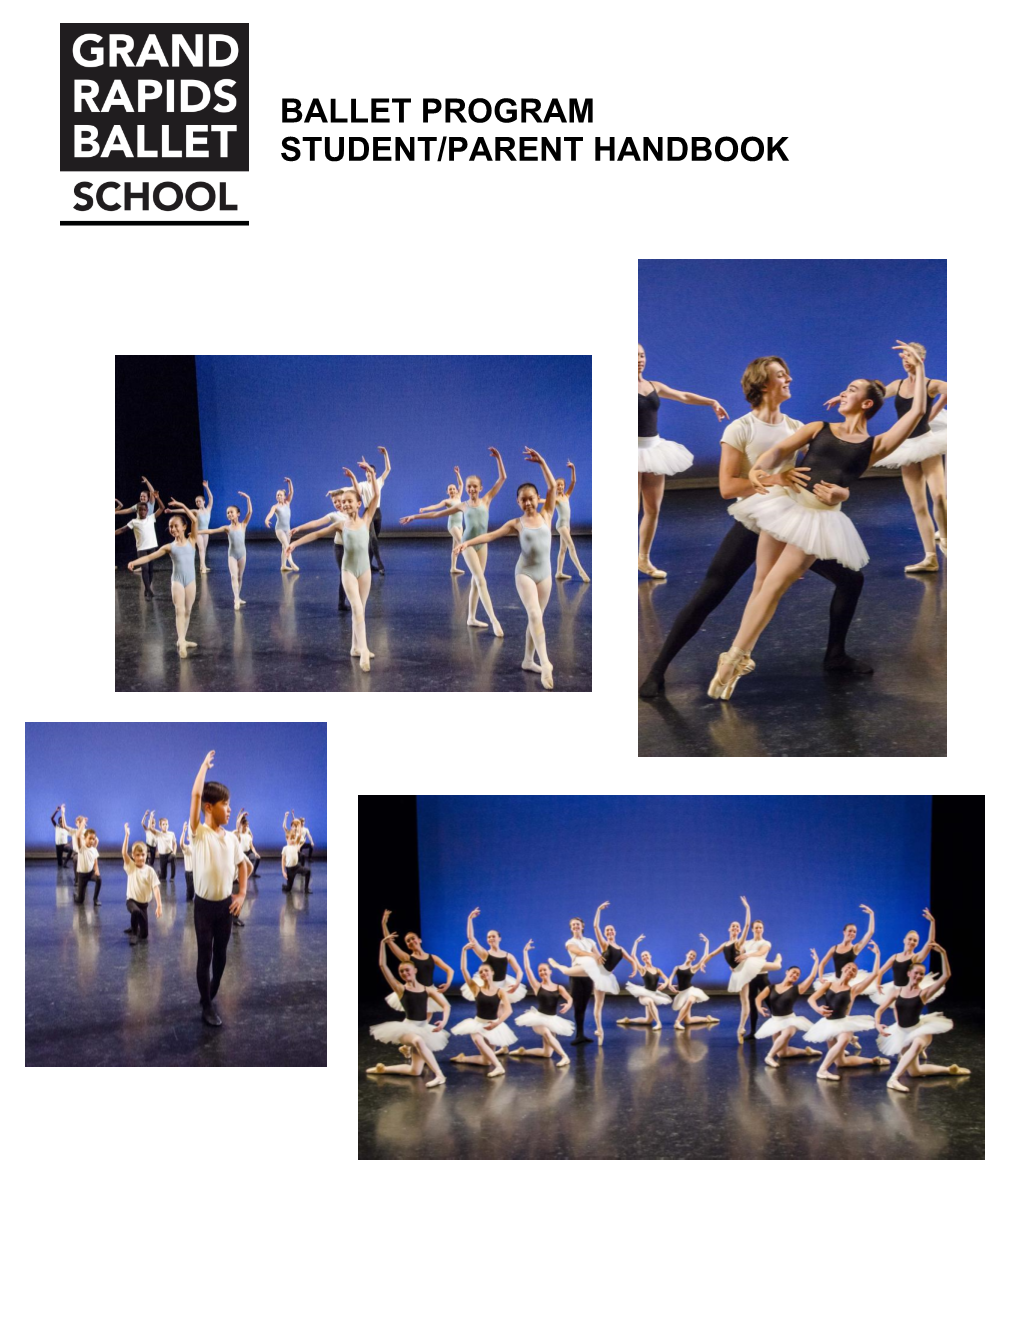 Ballet Program Student/Parent Handbook